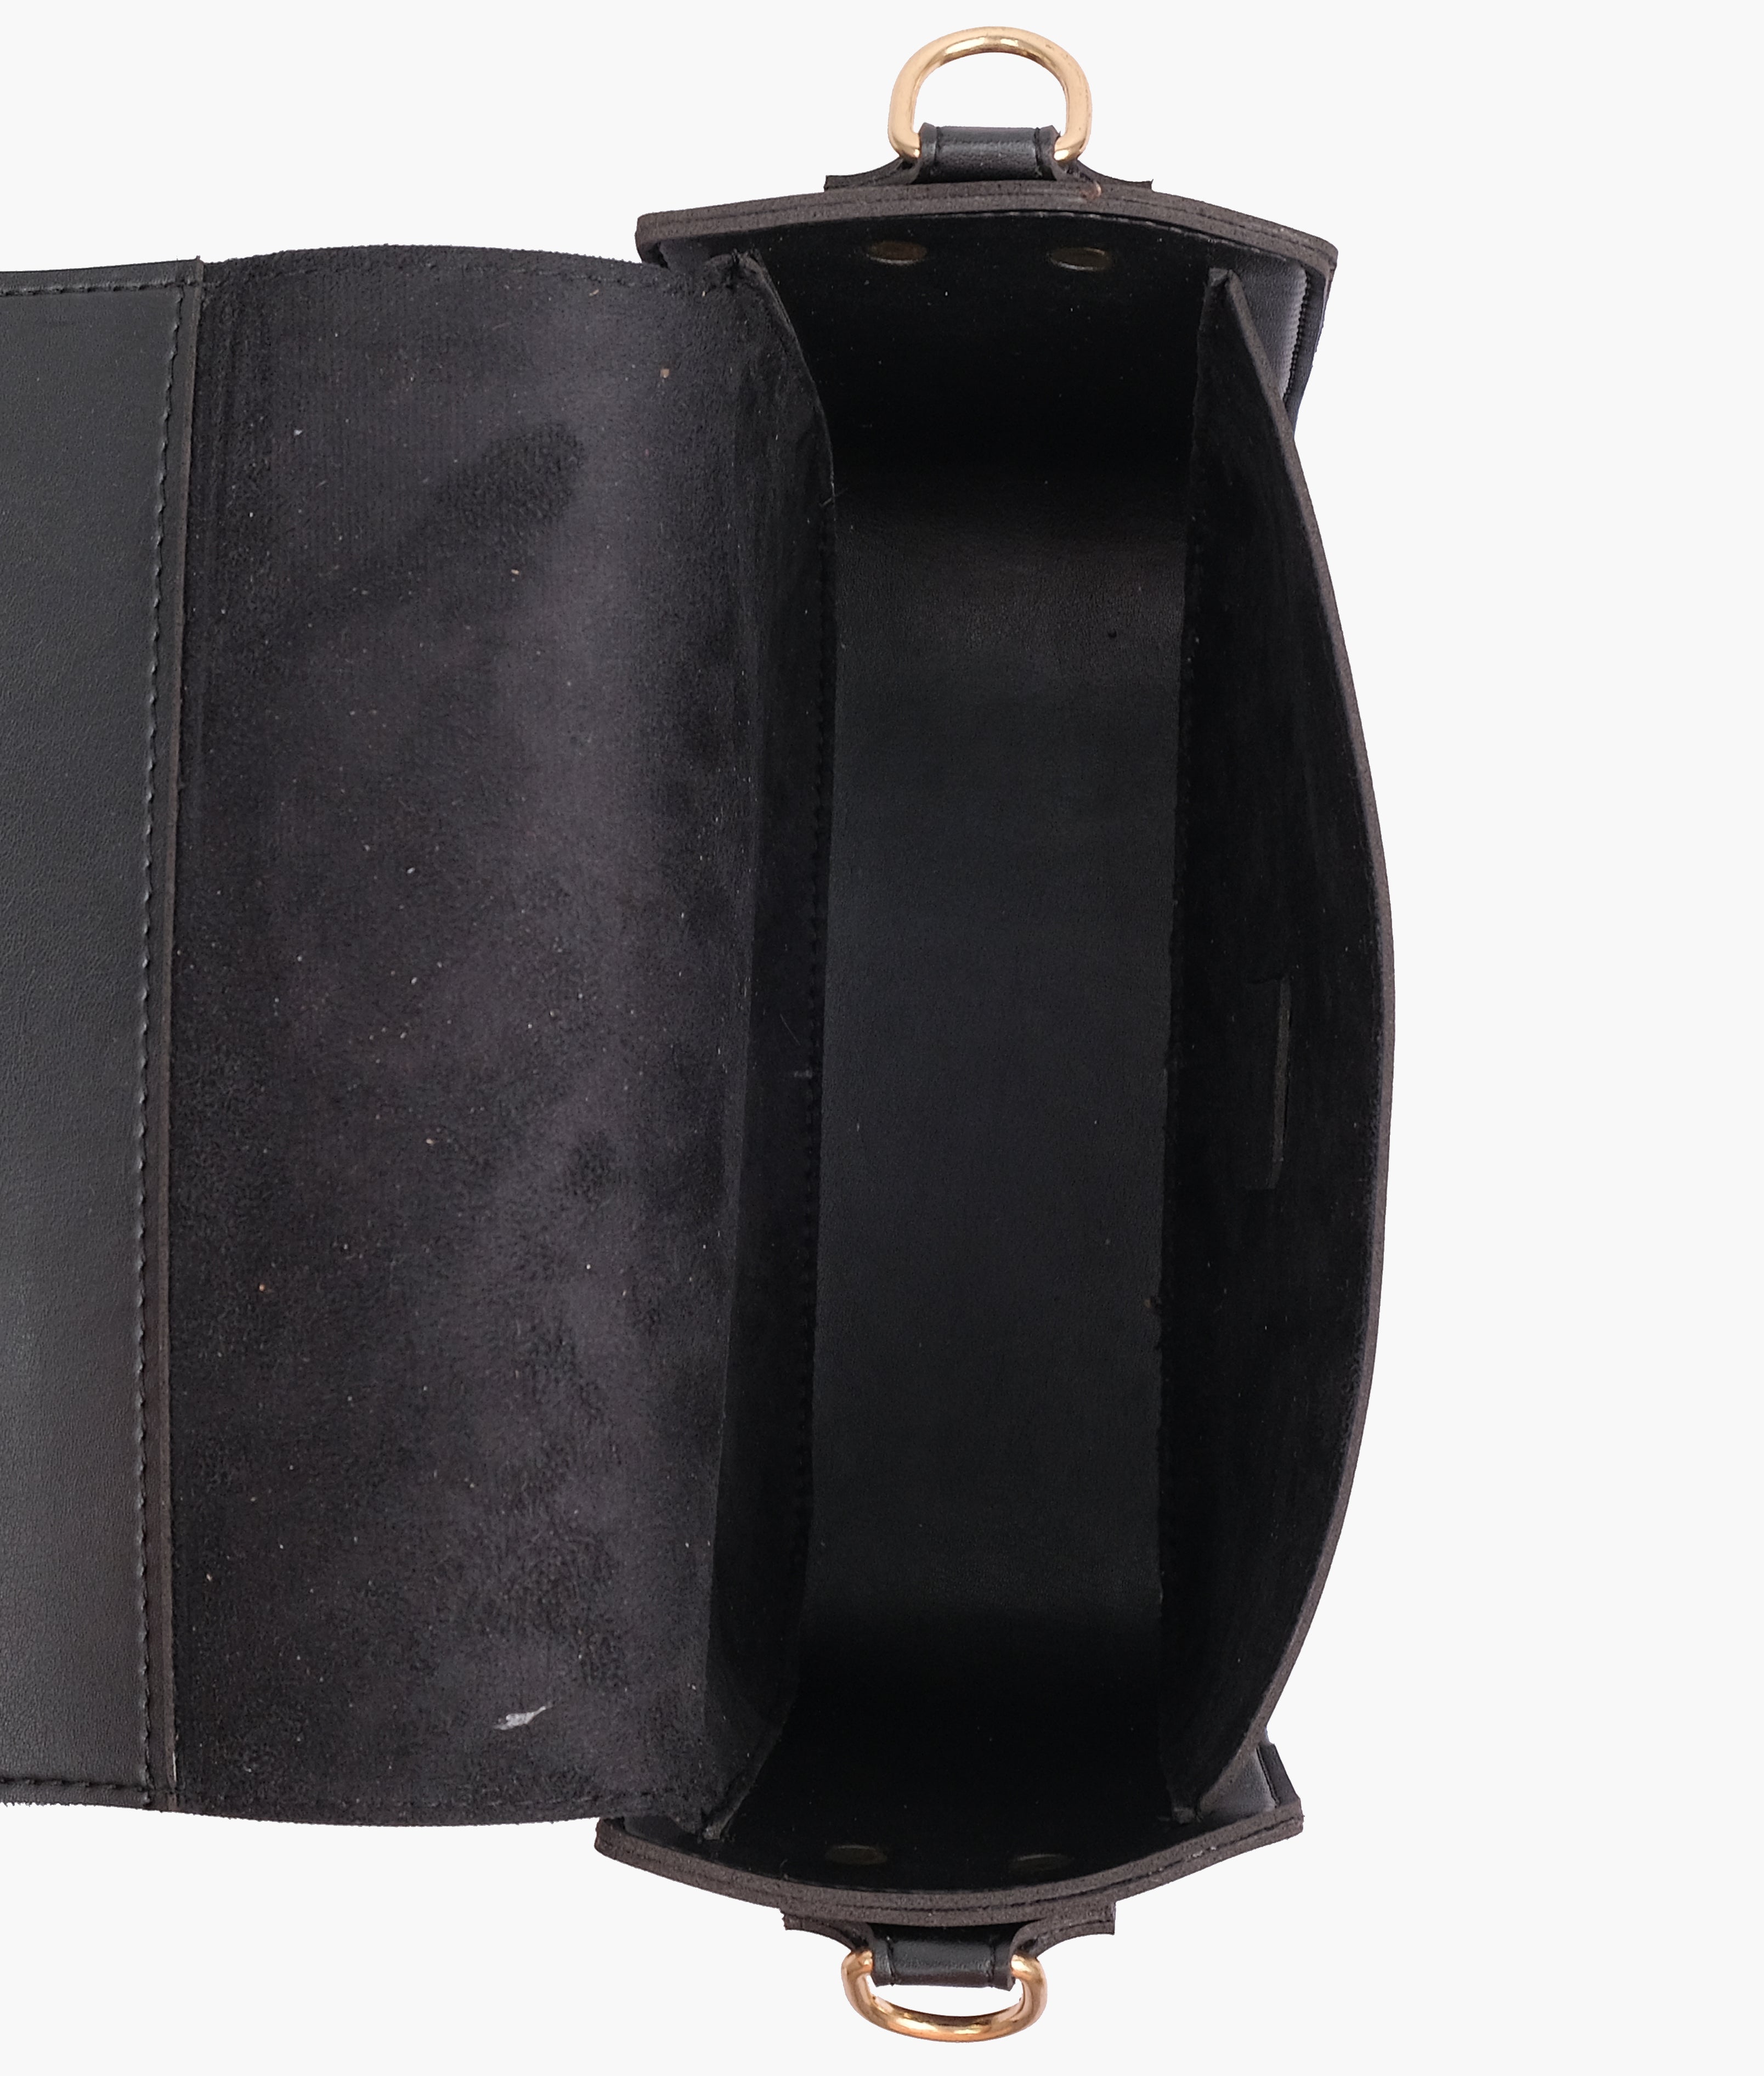 Black saddle bag with twist lock